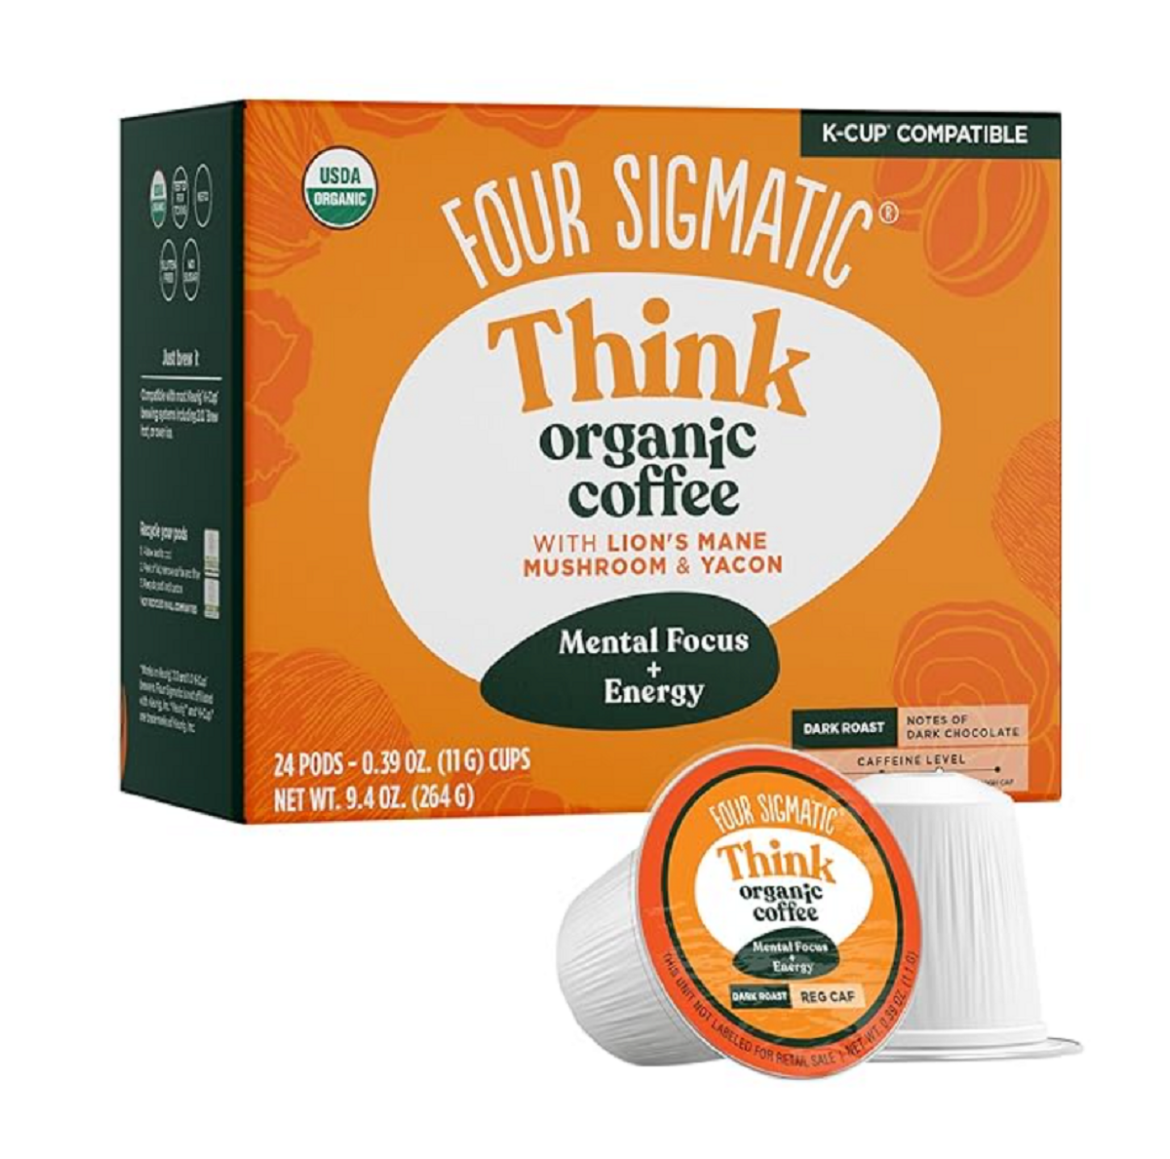 Four Sigmatic Mushroom Coffee K-Cups, Spring deal